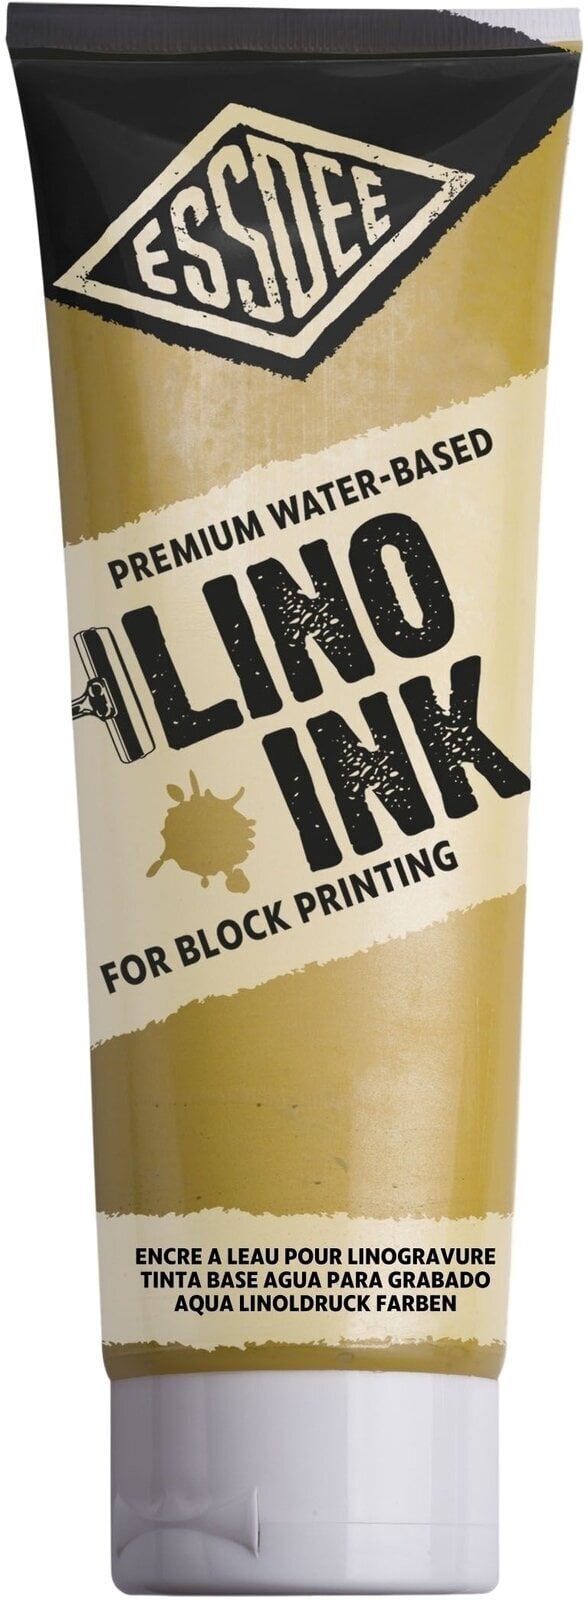 Farbe für Linolschnitt Essdee Block Printing Ink Farbe für Linolschnitt Pearlescent Yellow 300 ml